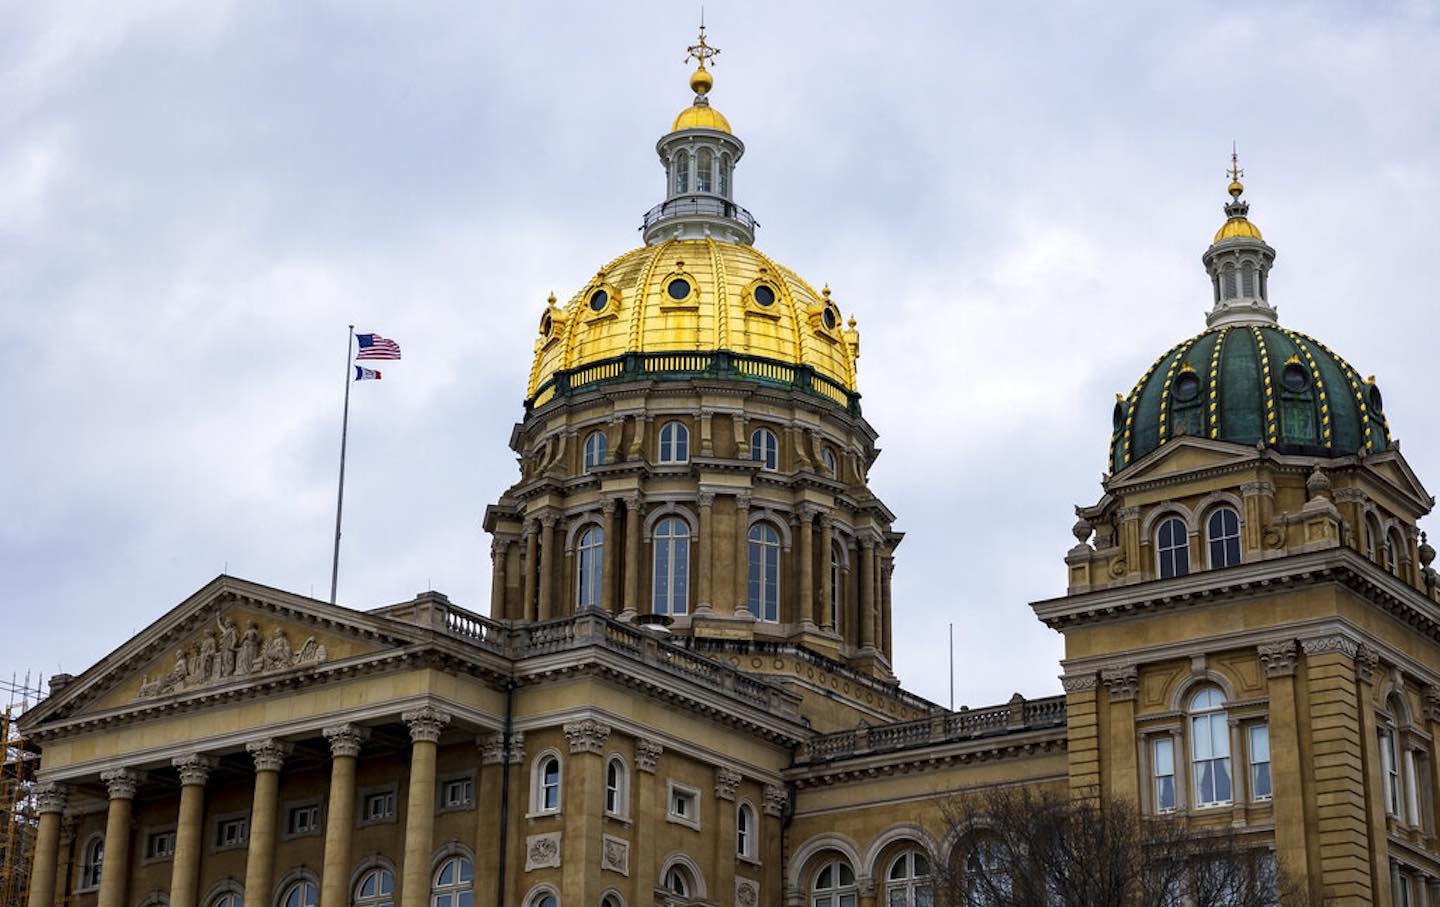 The Iowa State Capitol